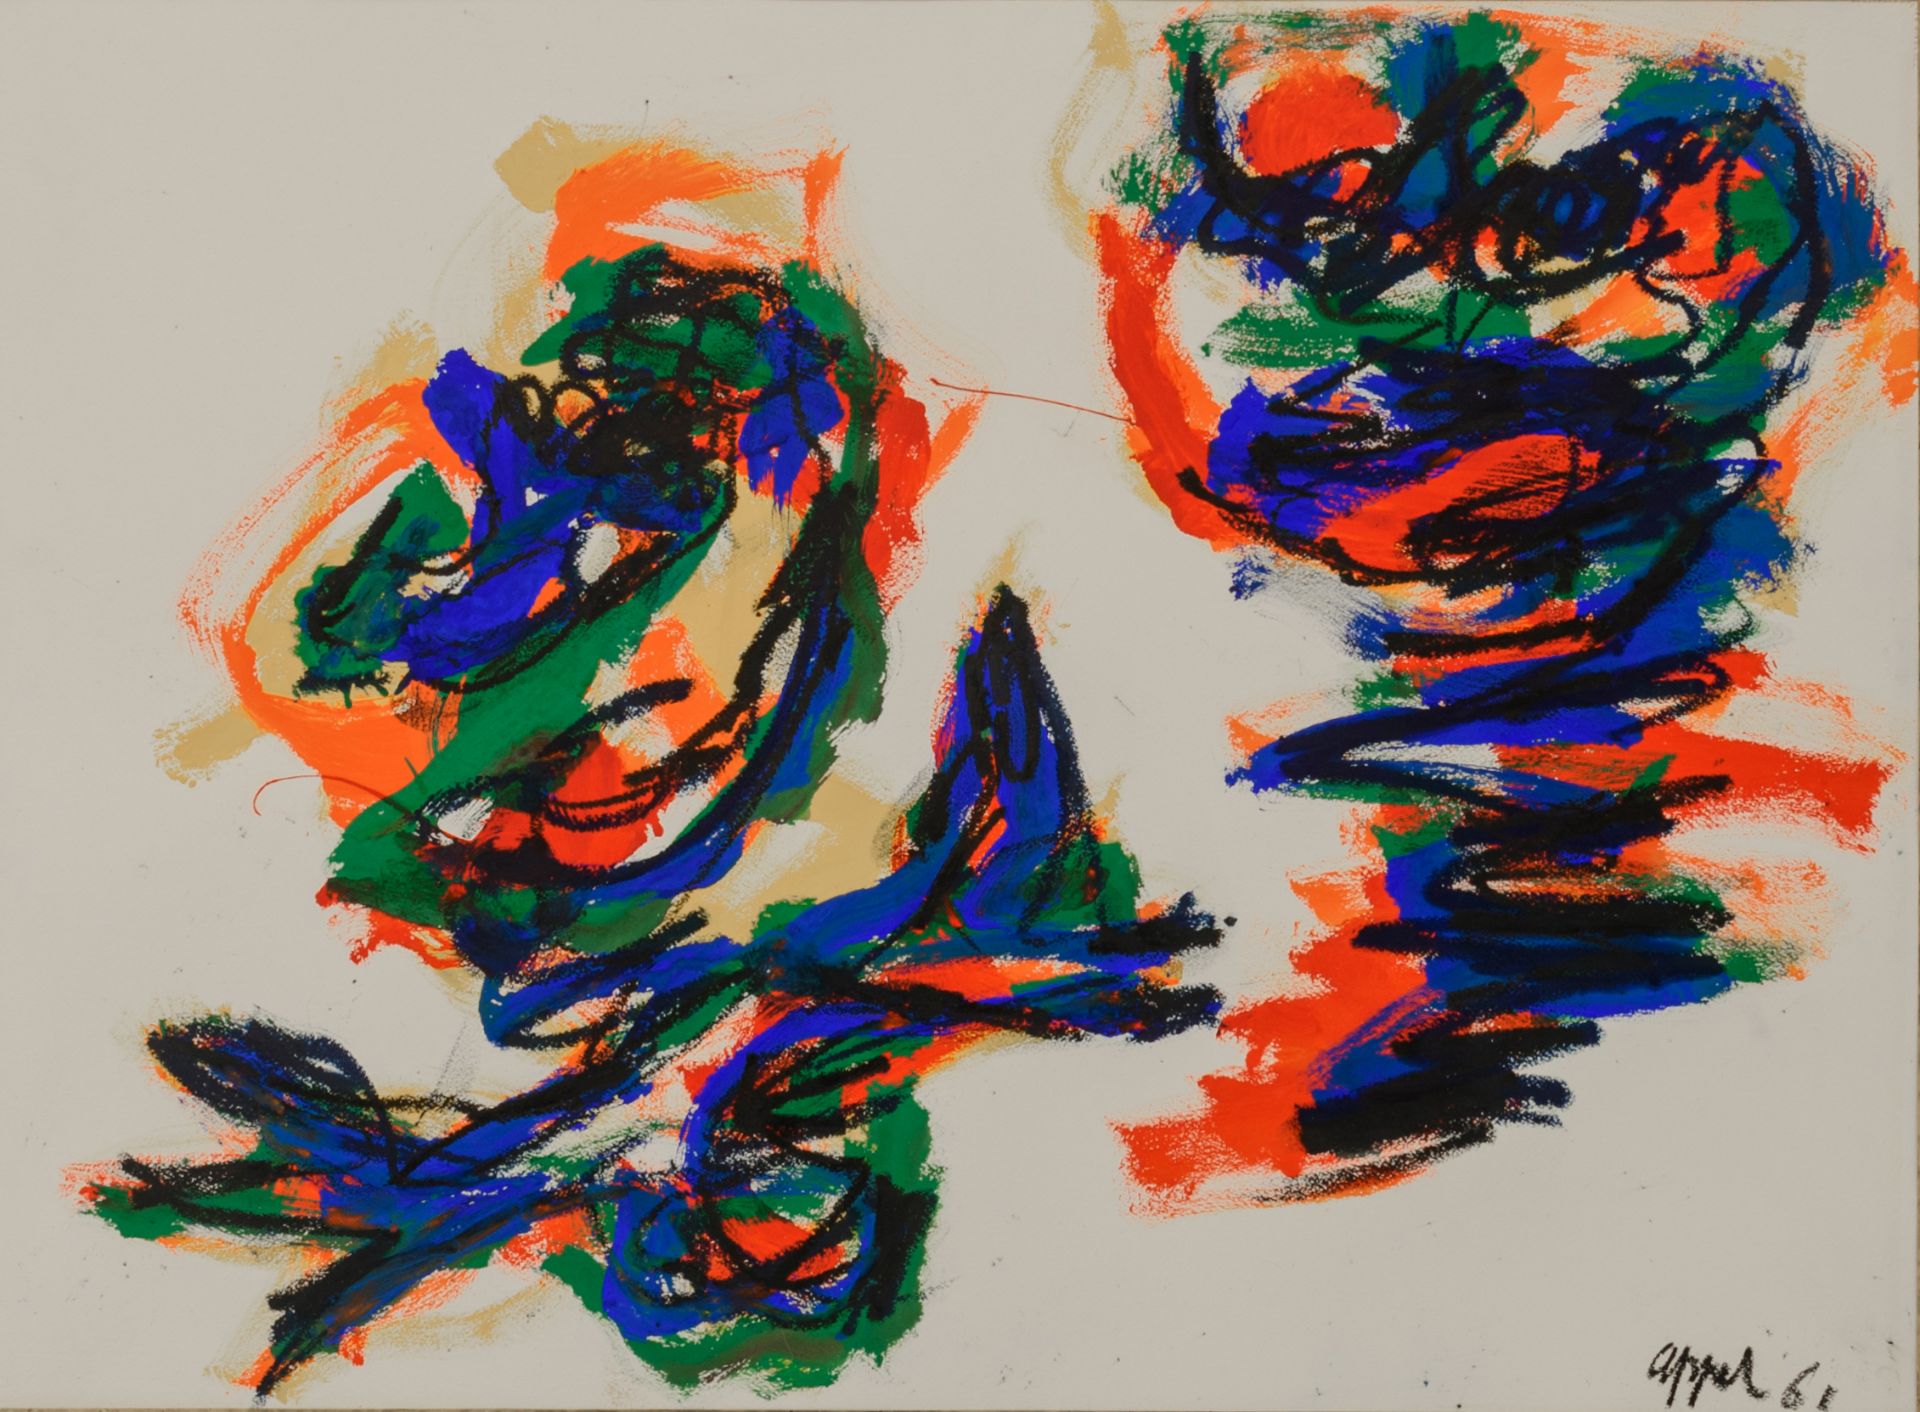 Karel Appel (1921-2006), 'Two Figures', 1961, 55 x 76 cm